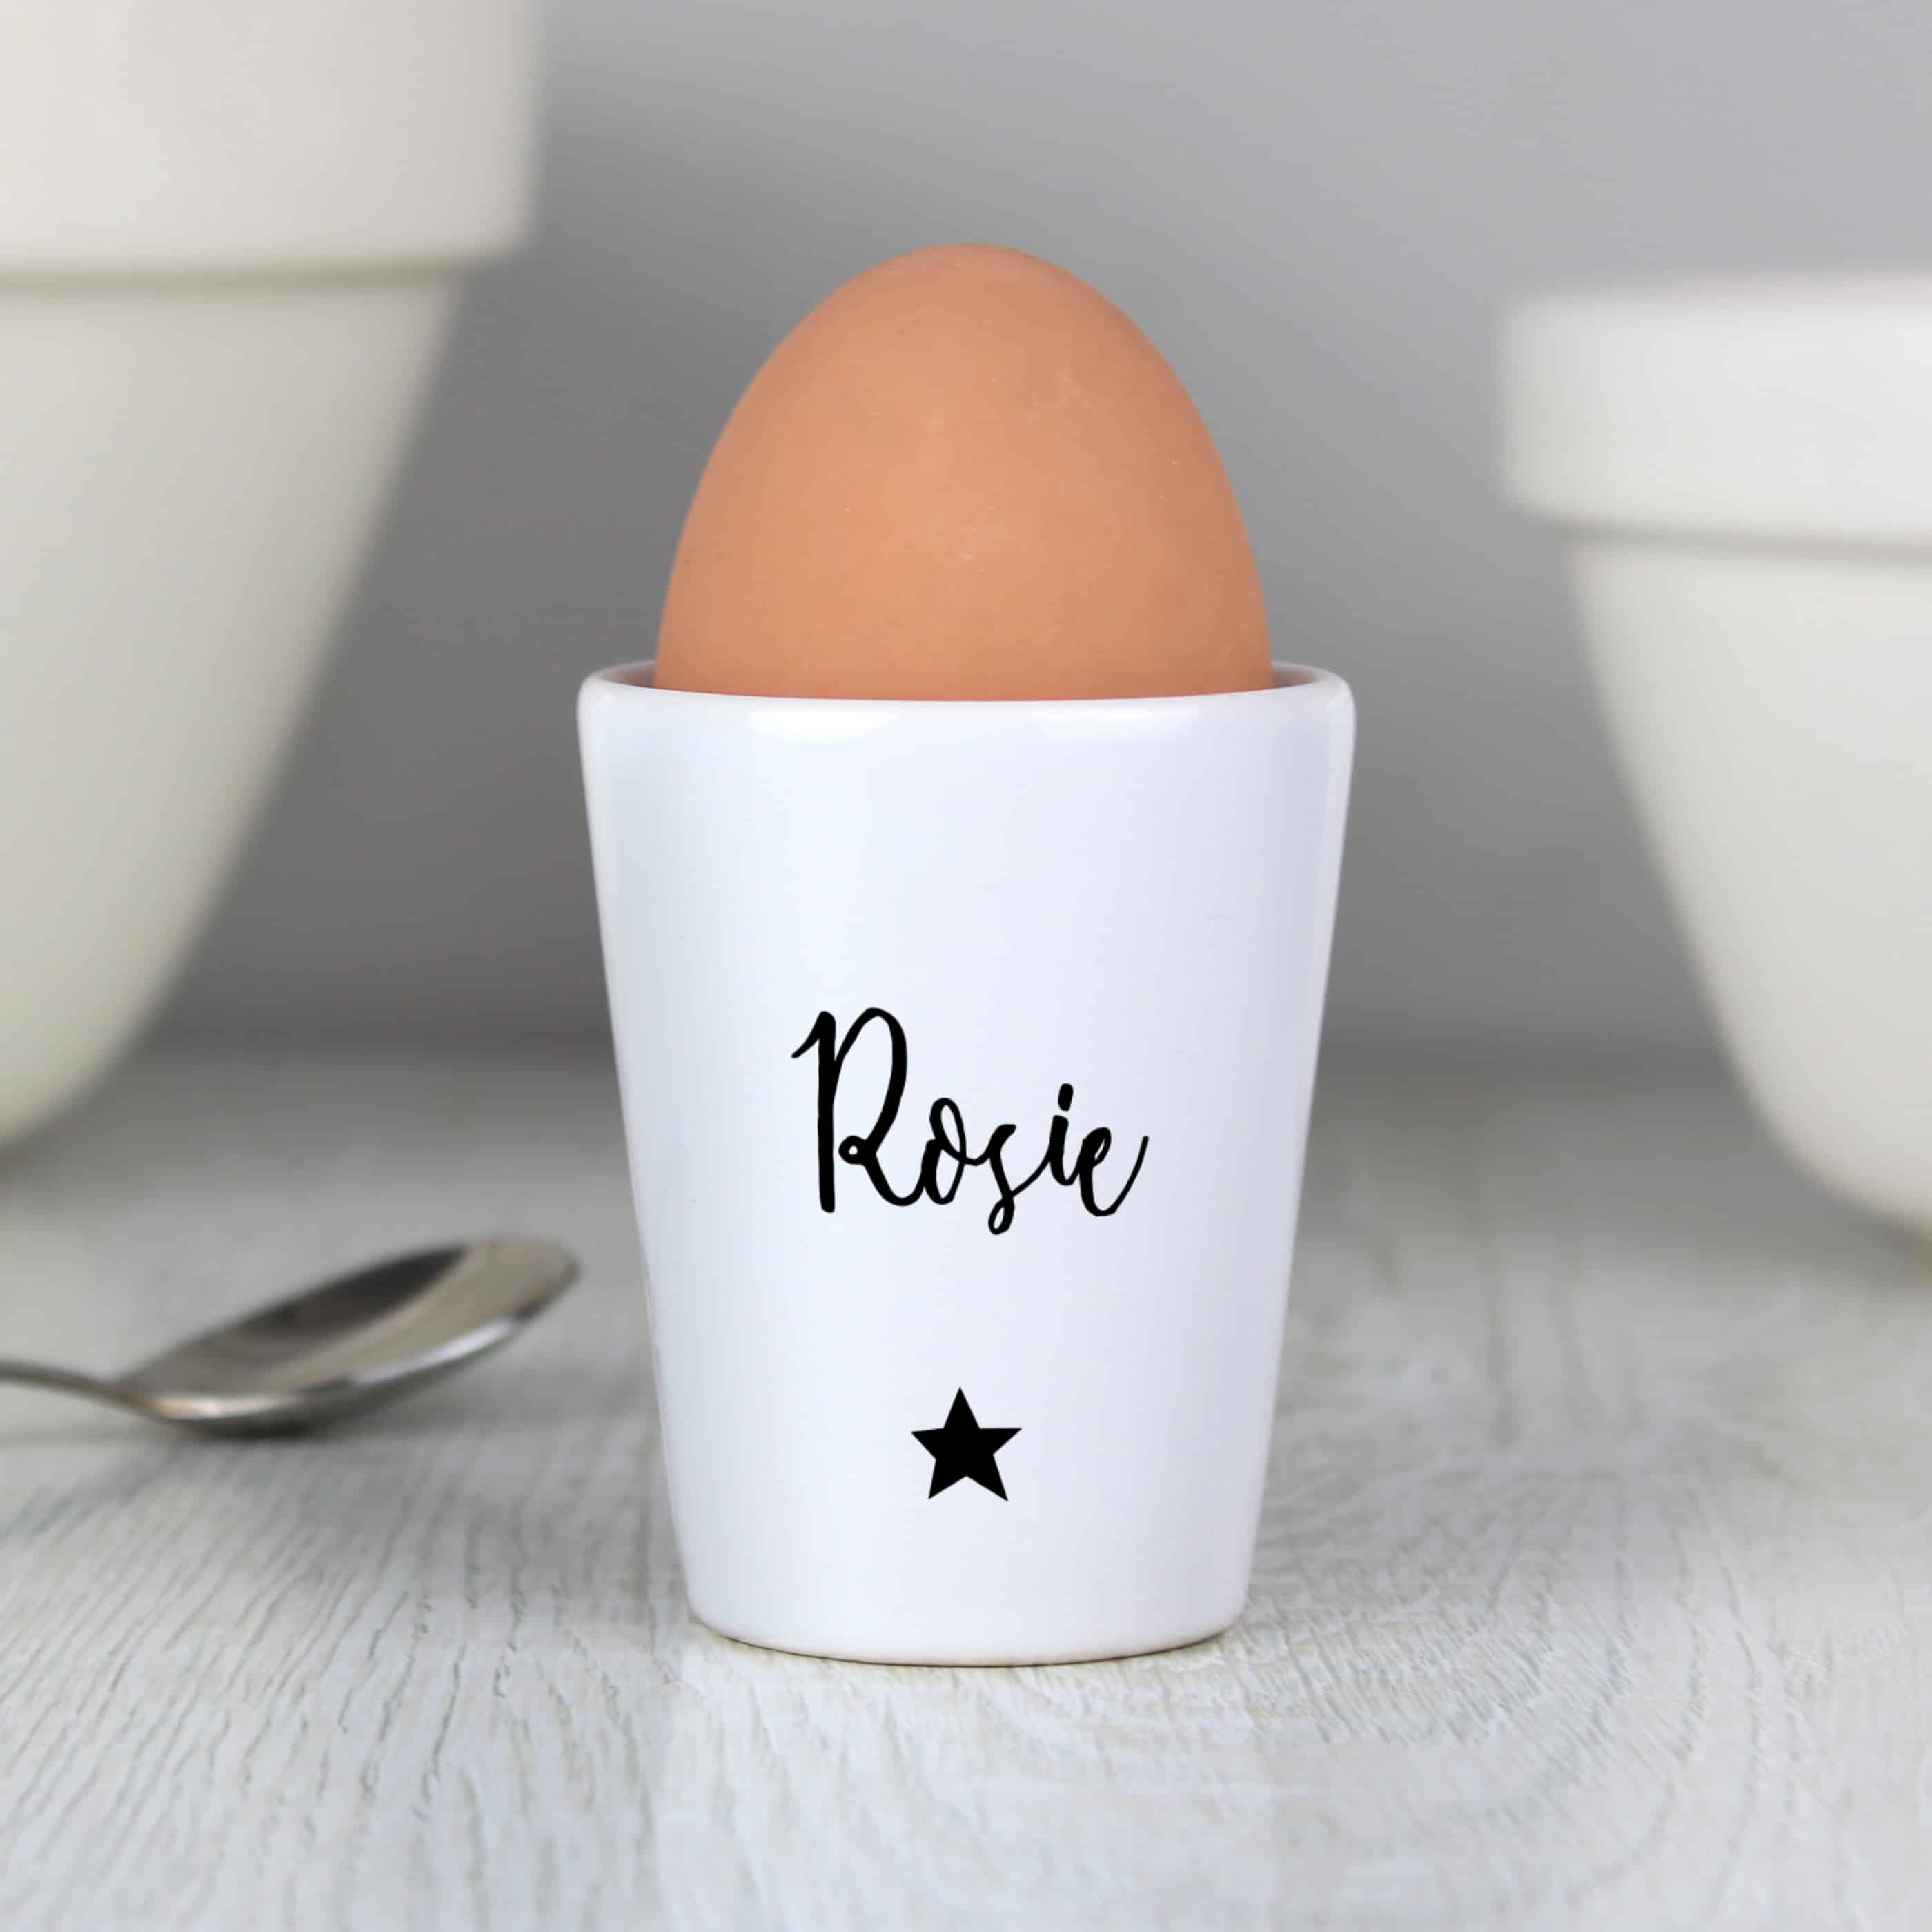 personalised ceramic egg cup